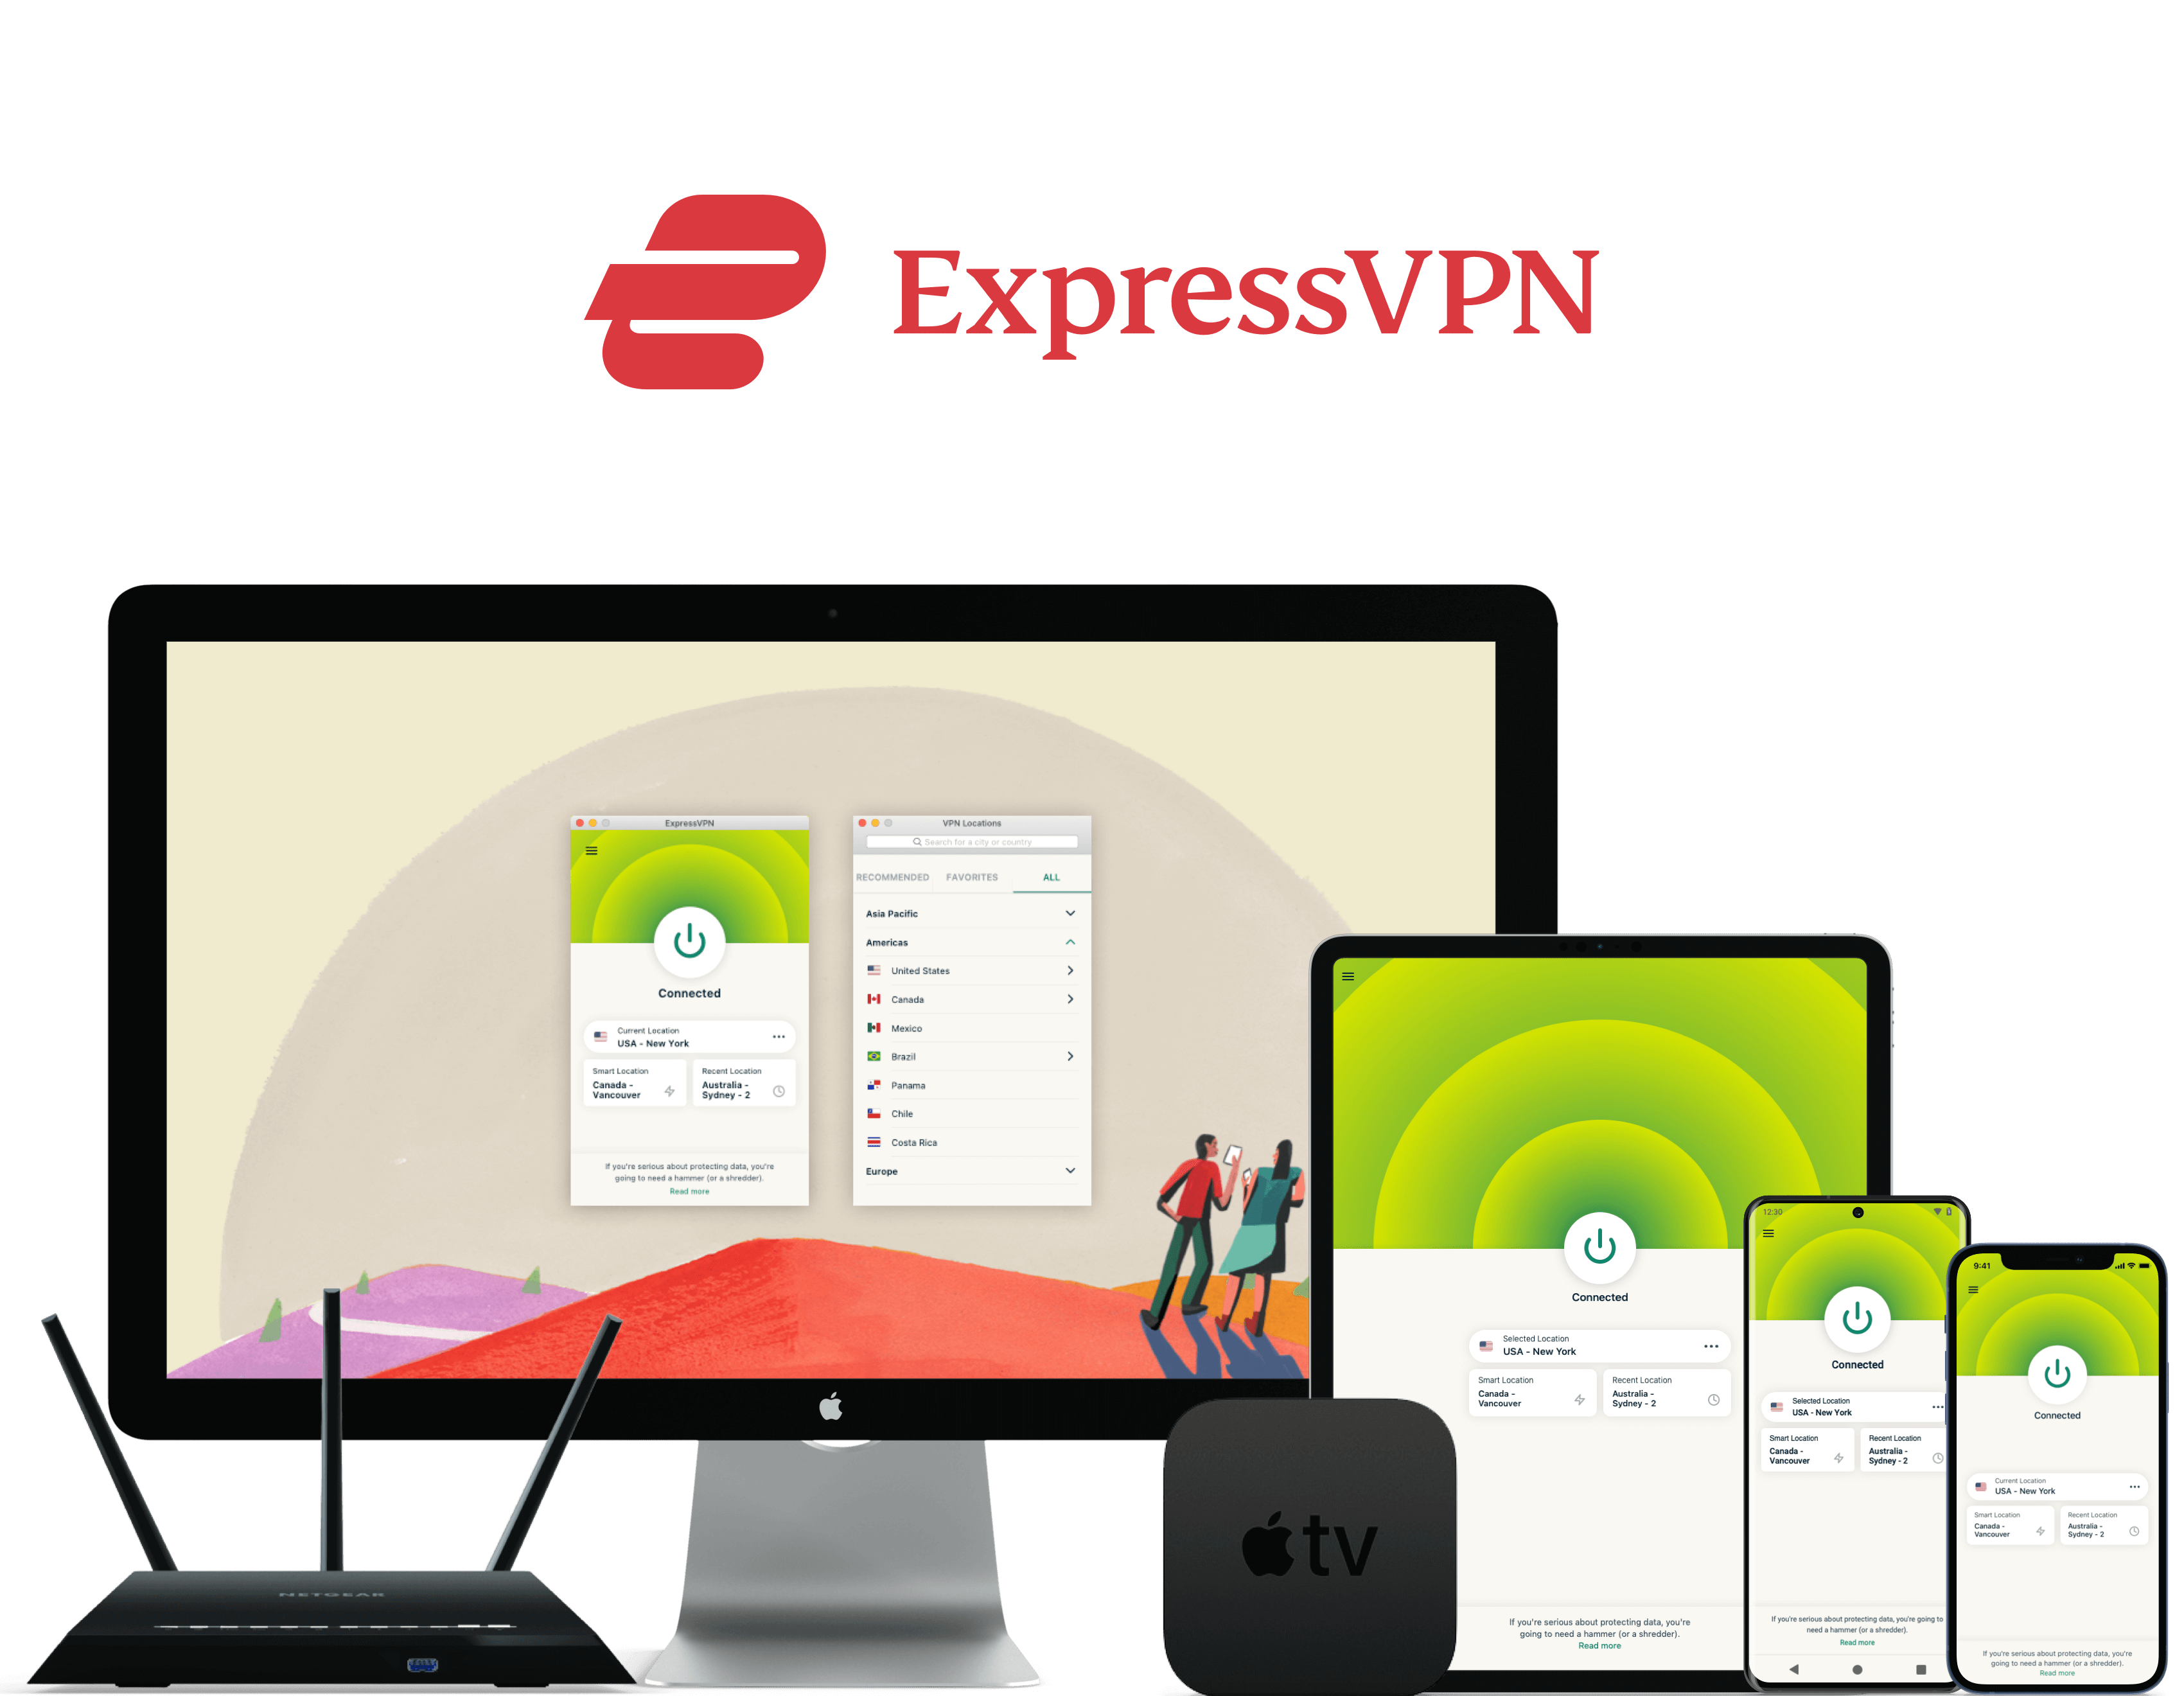 ExpressVPN - Applicazioni su tutti i dispositivi